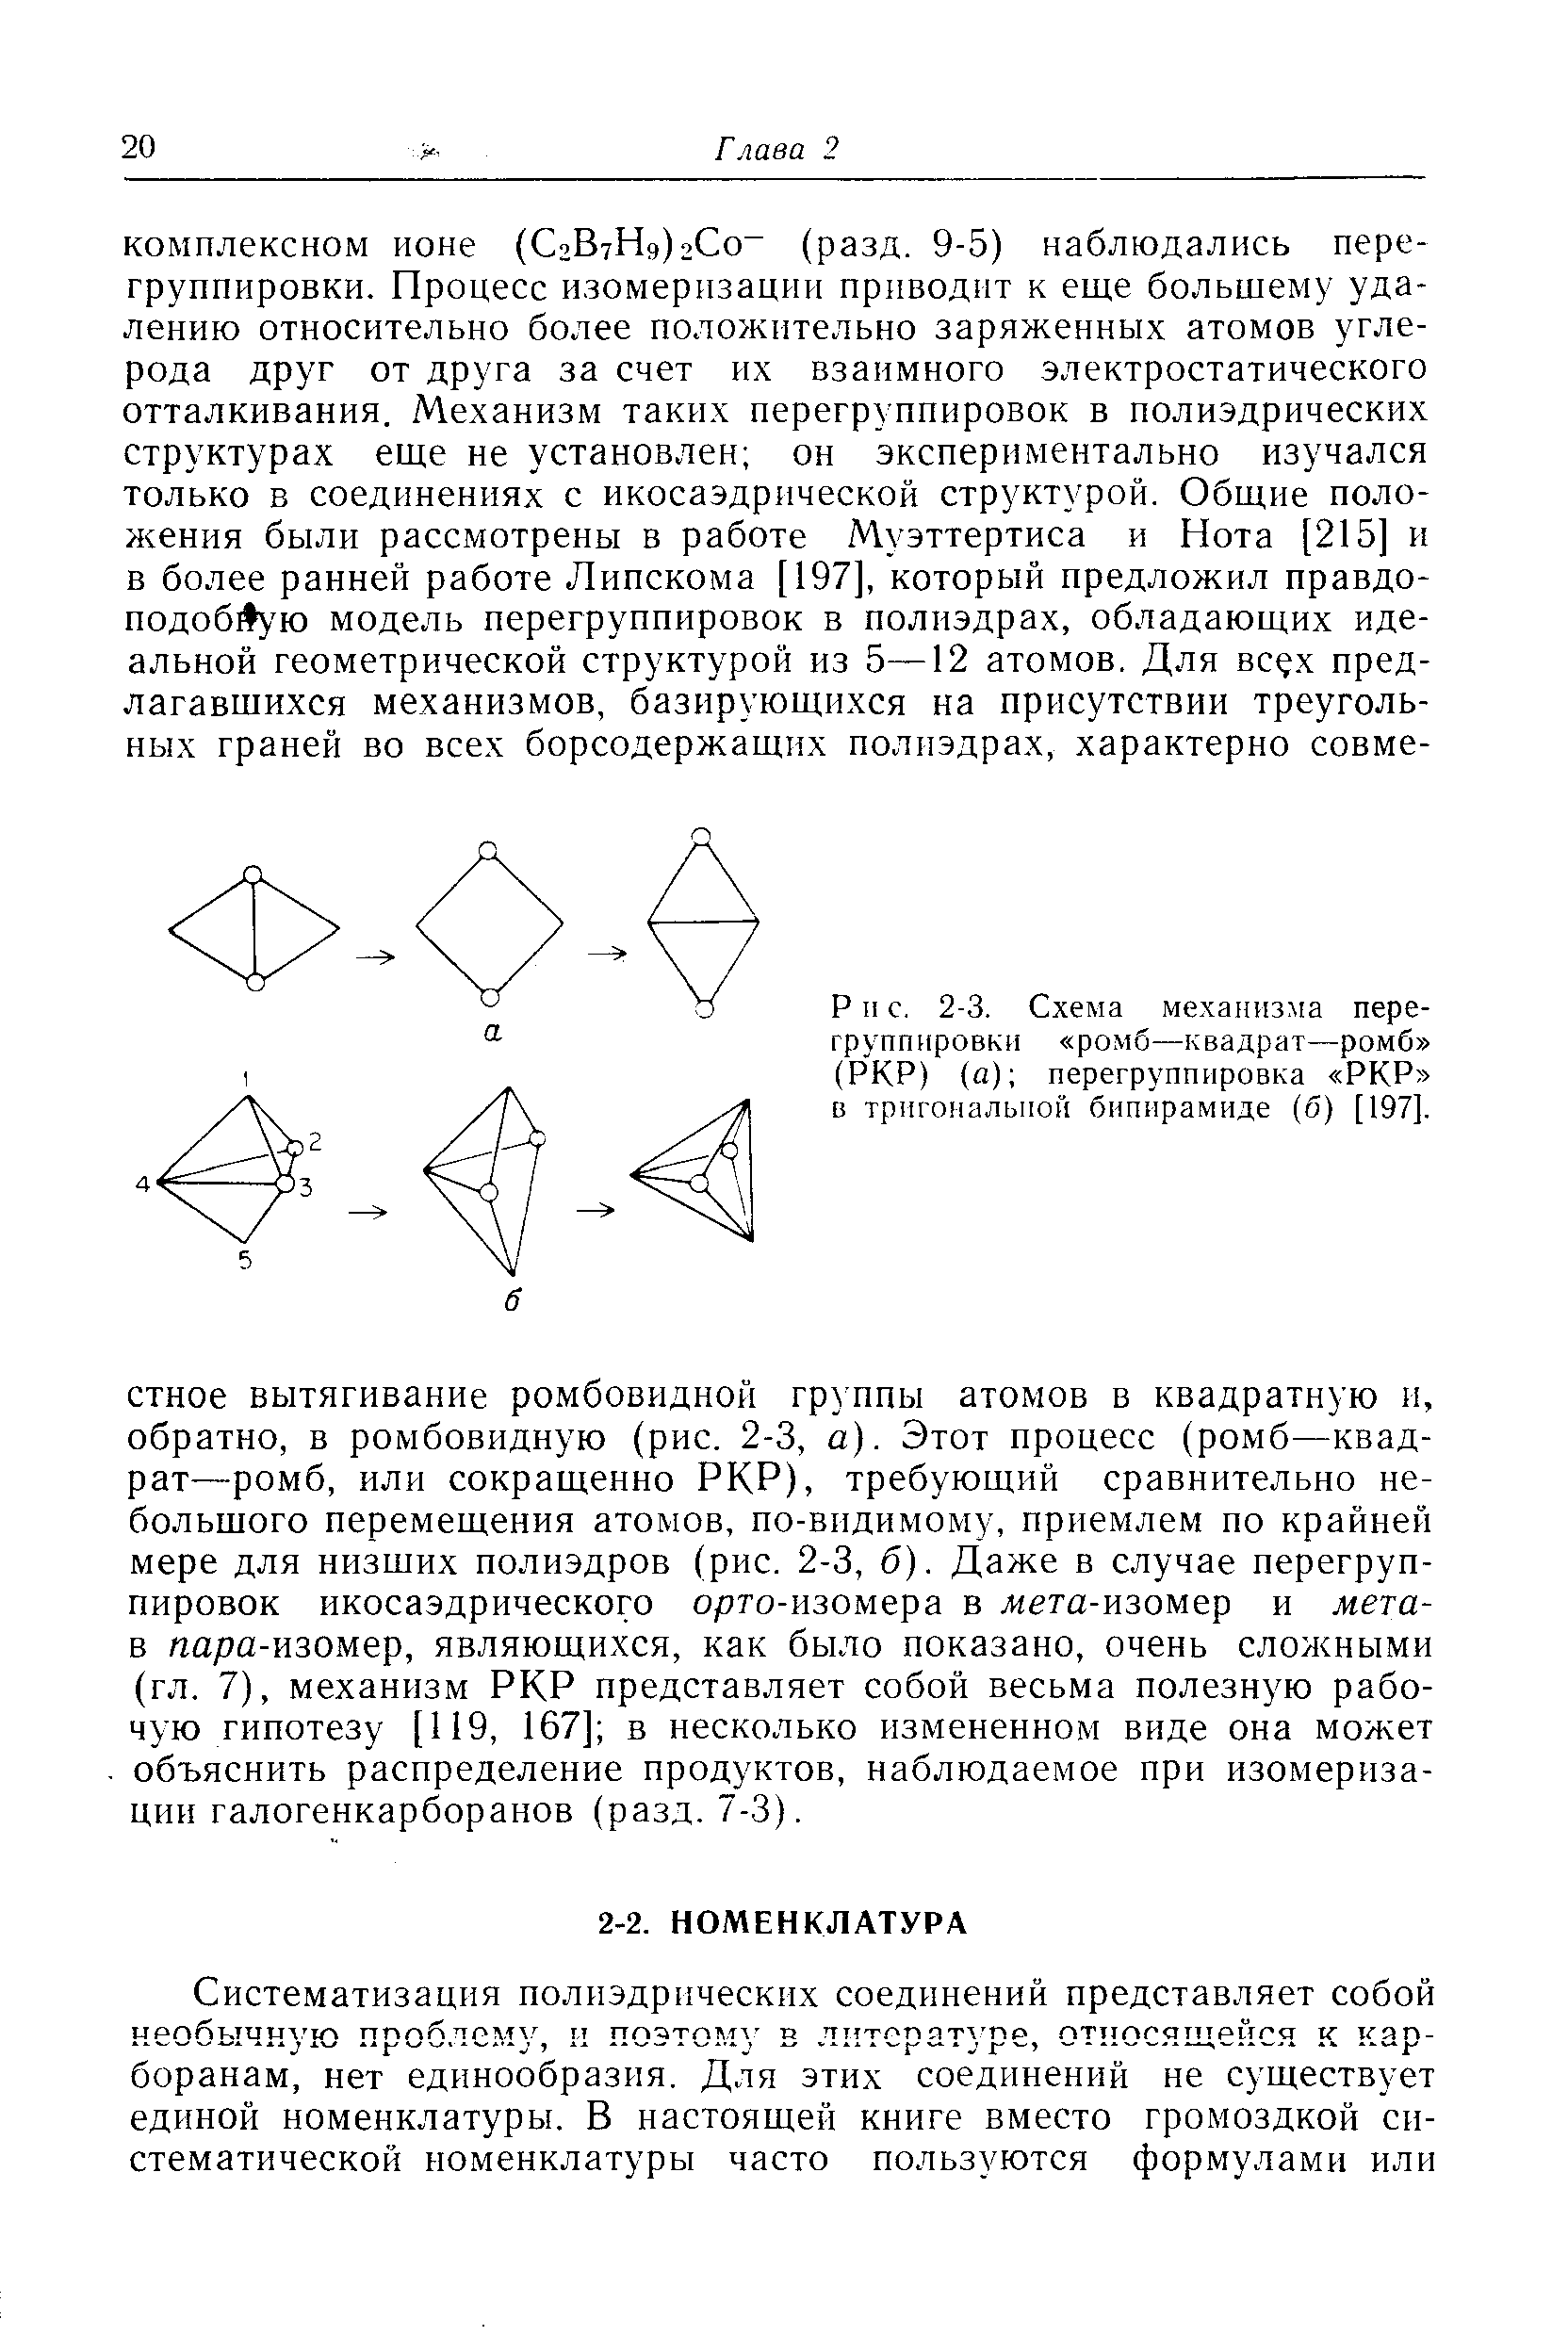 Схема механизма перегруппировки ромб—квадрат—ромб (РКР) (а) перегруппировка РКР в тригоиалыюй бипирамиде (б) [197].